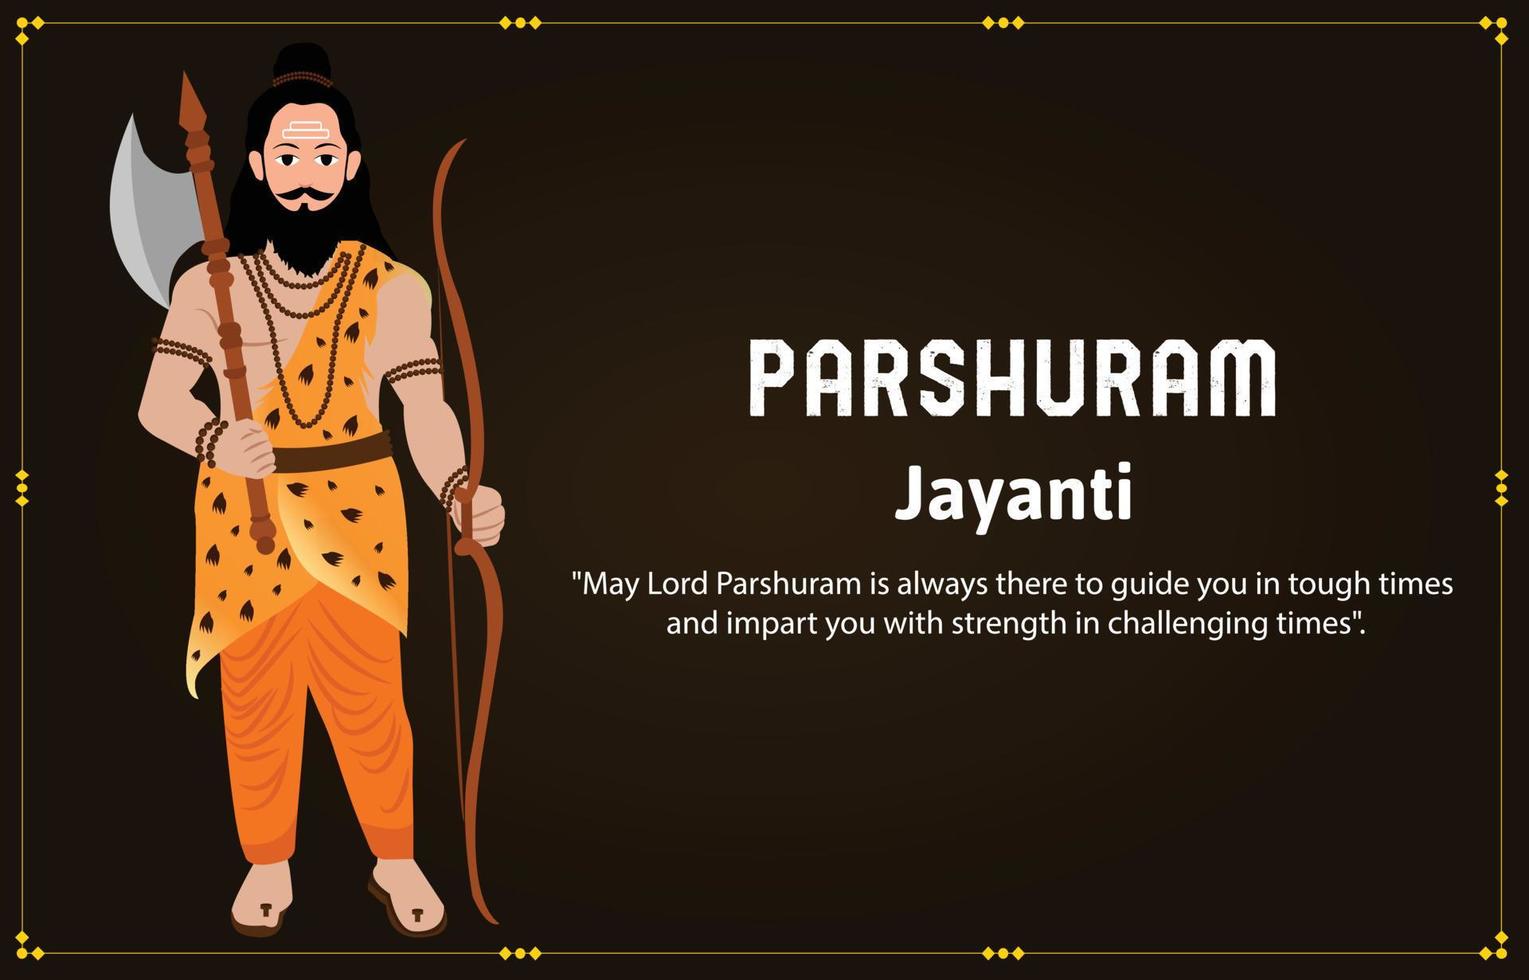 parshuram Jayanti señor parasurama indio hindú festival celebracion vector ilustraciones